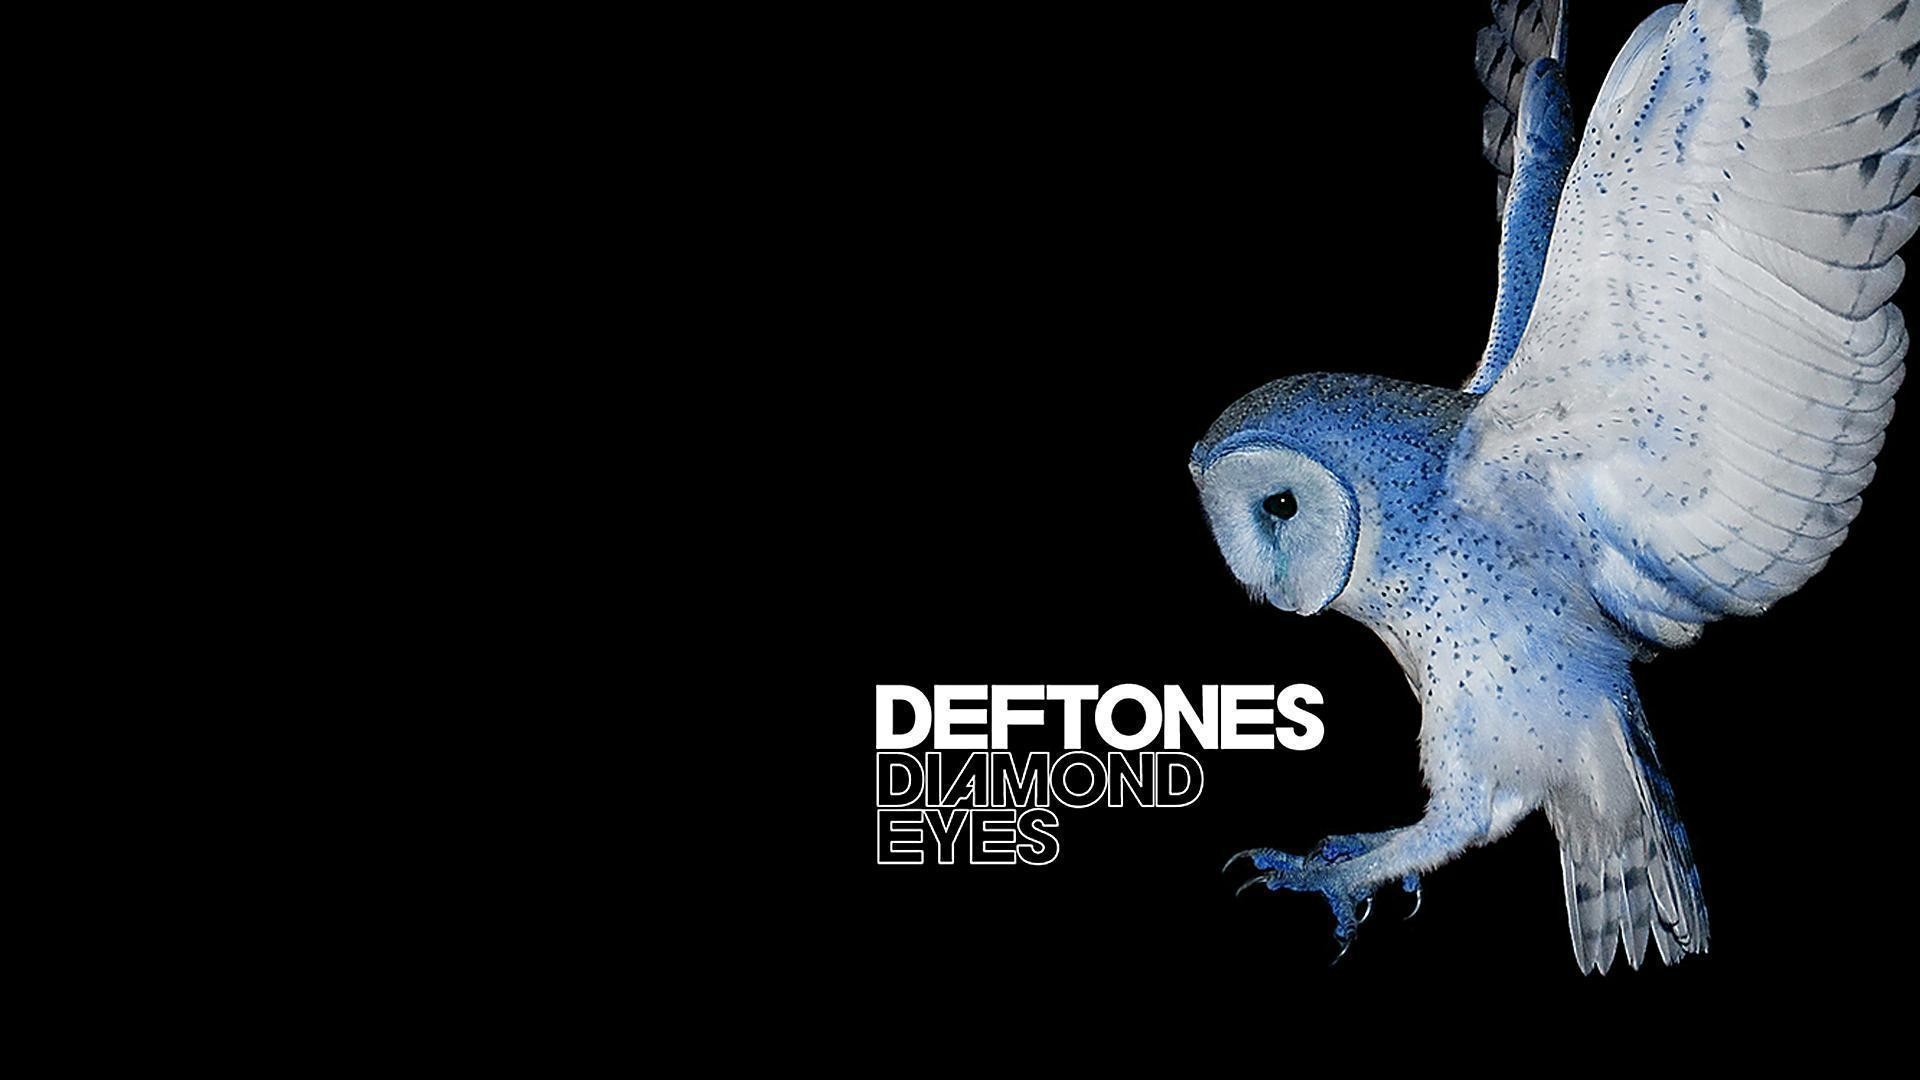 1920x1080 Deftones - Diamond Eyes iPhone 5 / SE Wallpaper